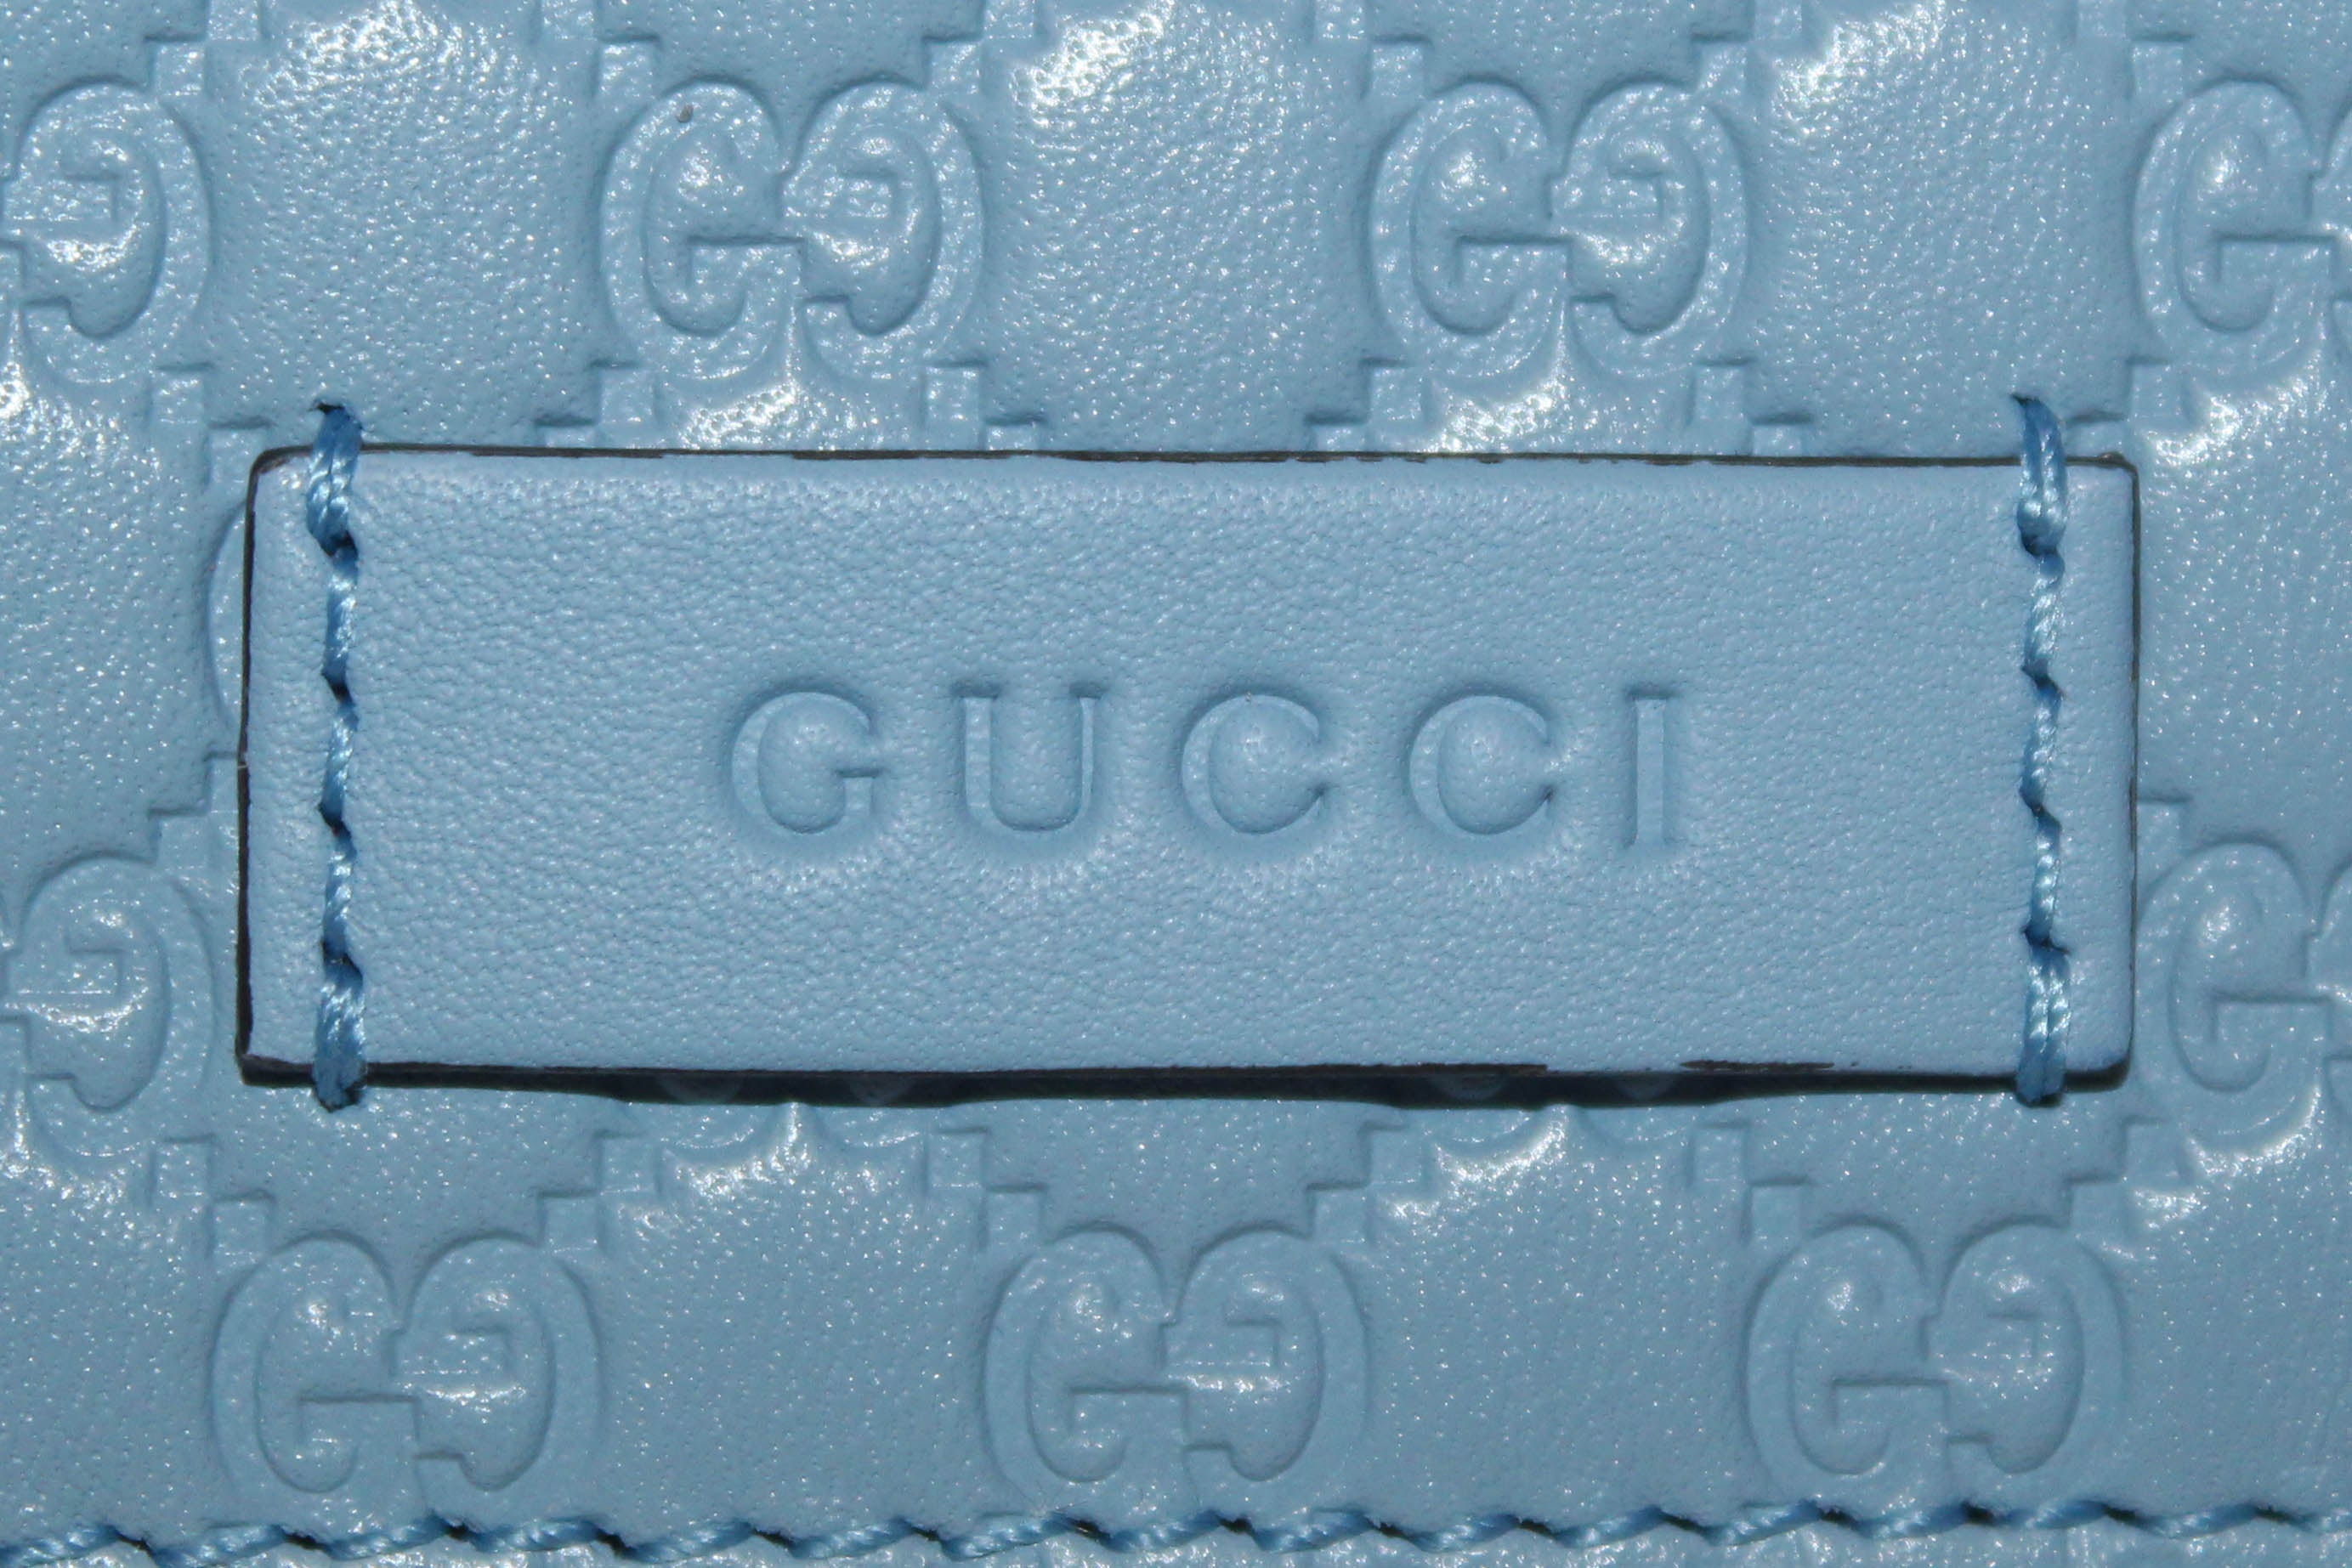 Authentic New Gucci Blue Micro Guccissima Leather Wallet w/ Strap